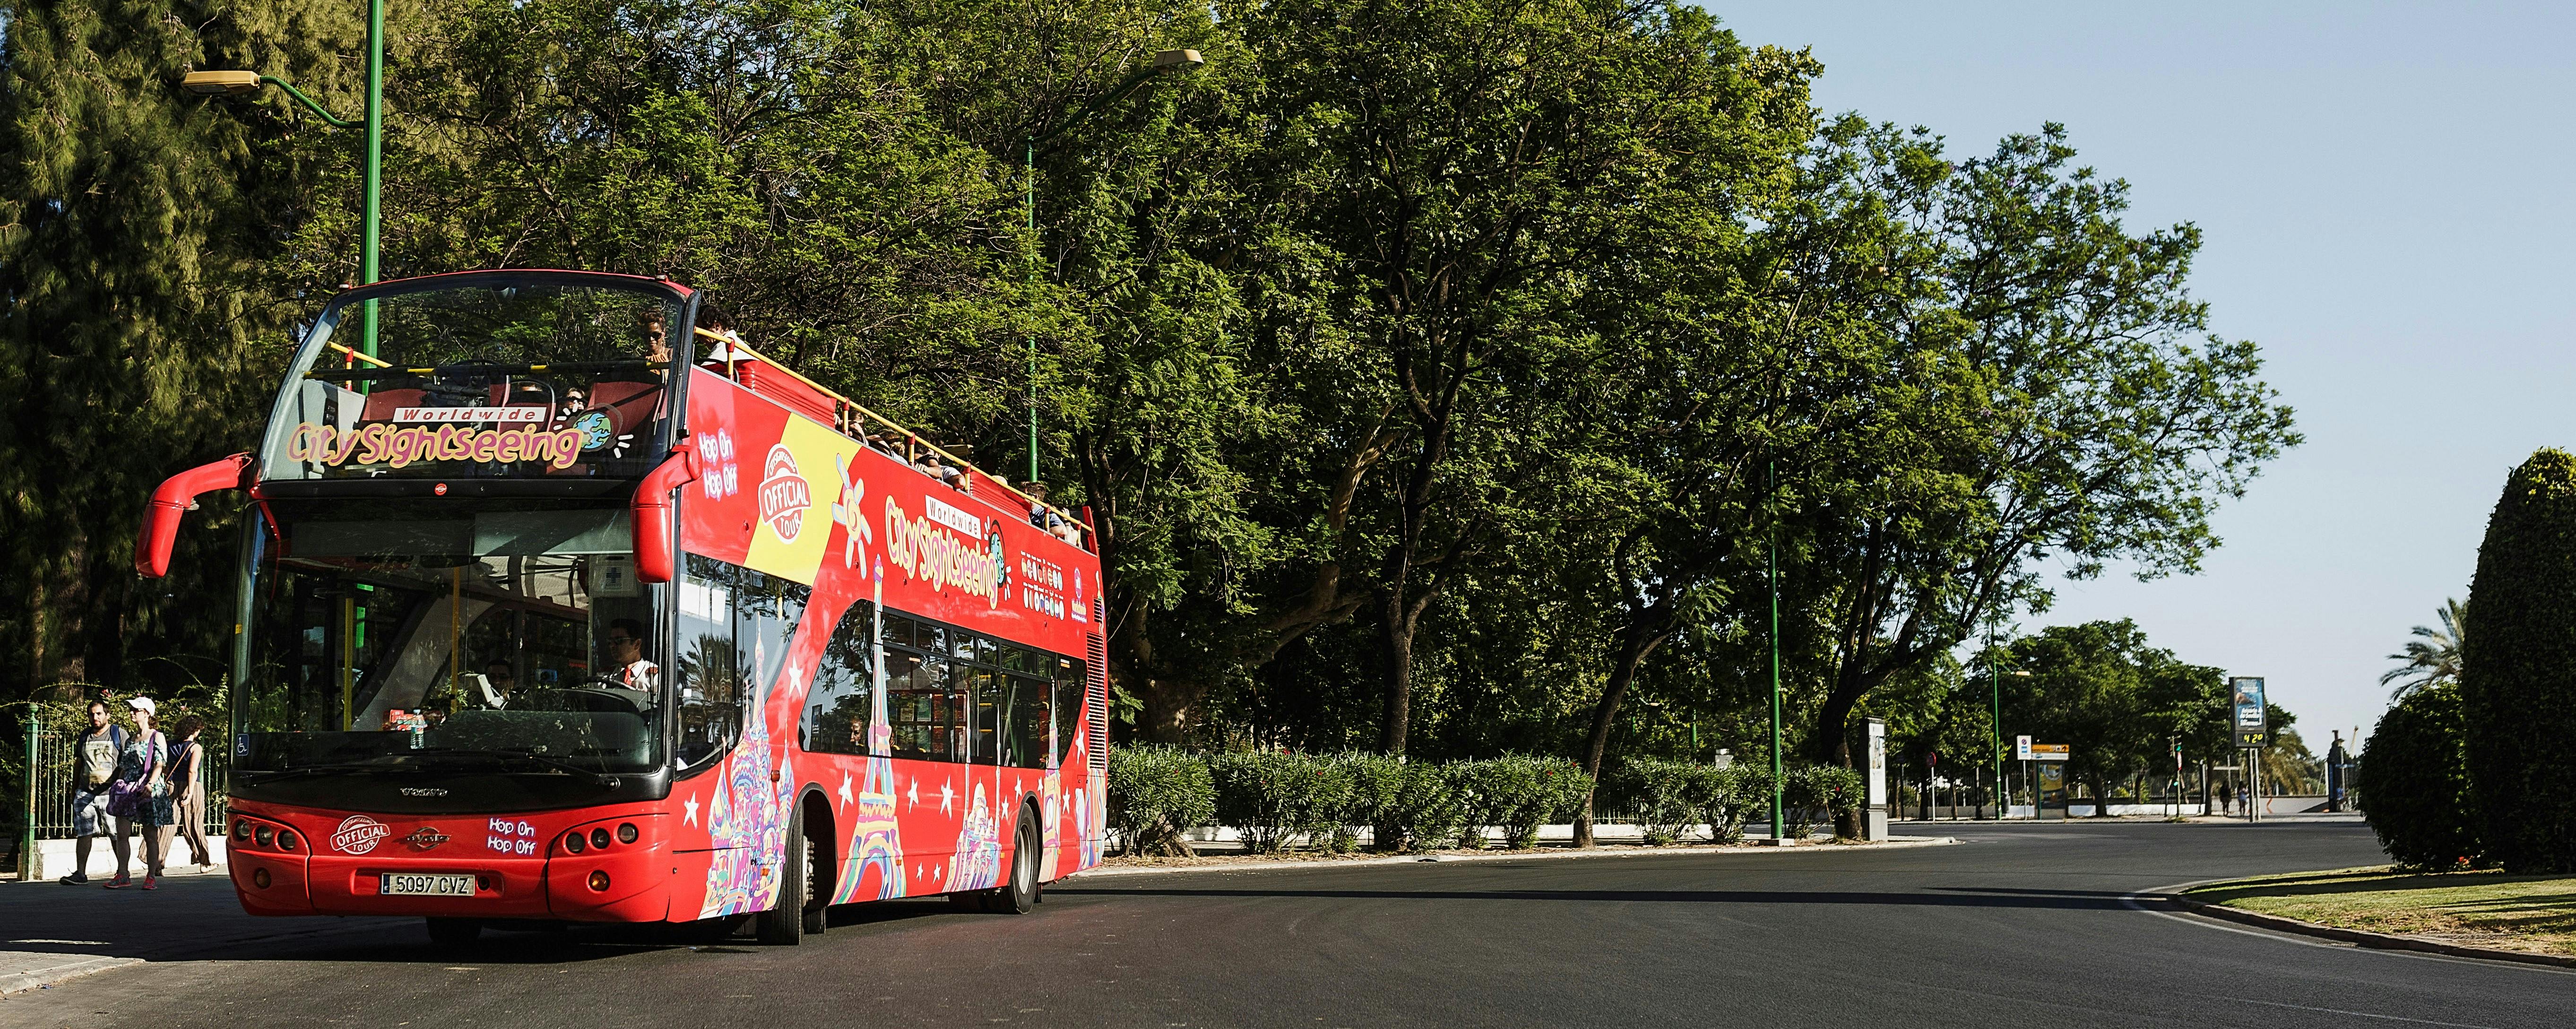 City Sightseeing hop-on hop-off bus tour of Benalmadena